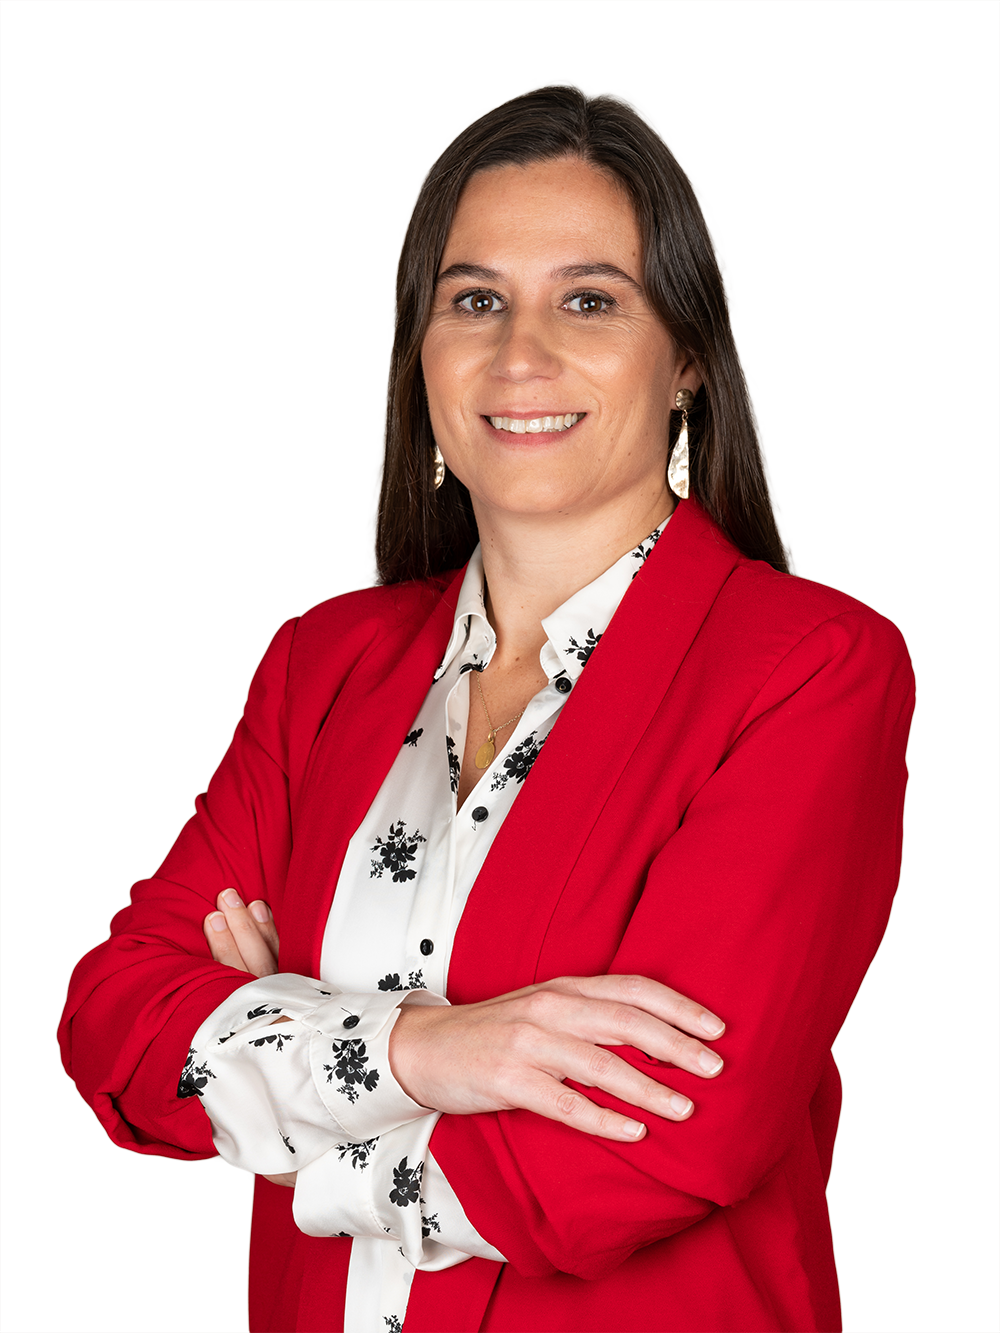 Mariana Sampaio - contencioso; litigation